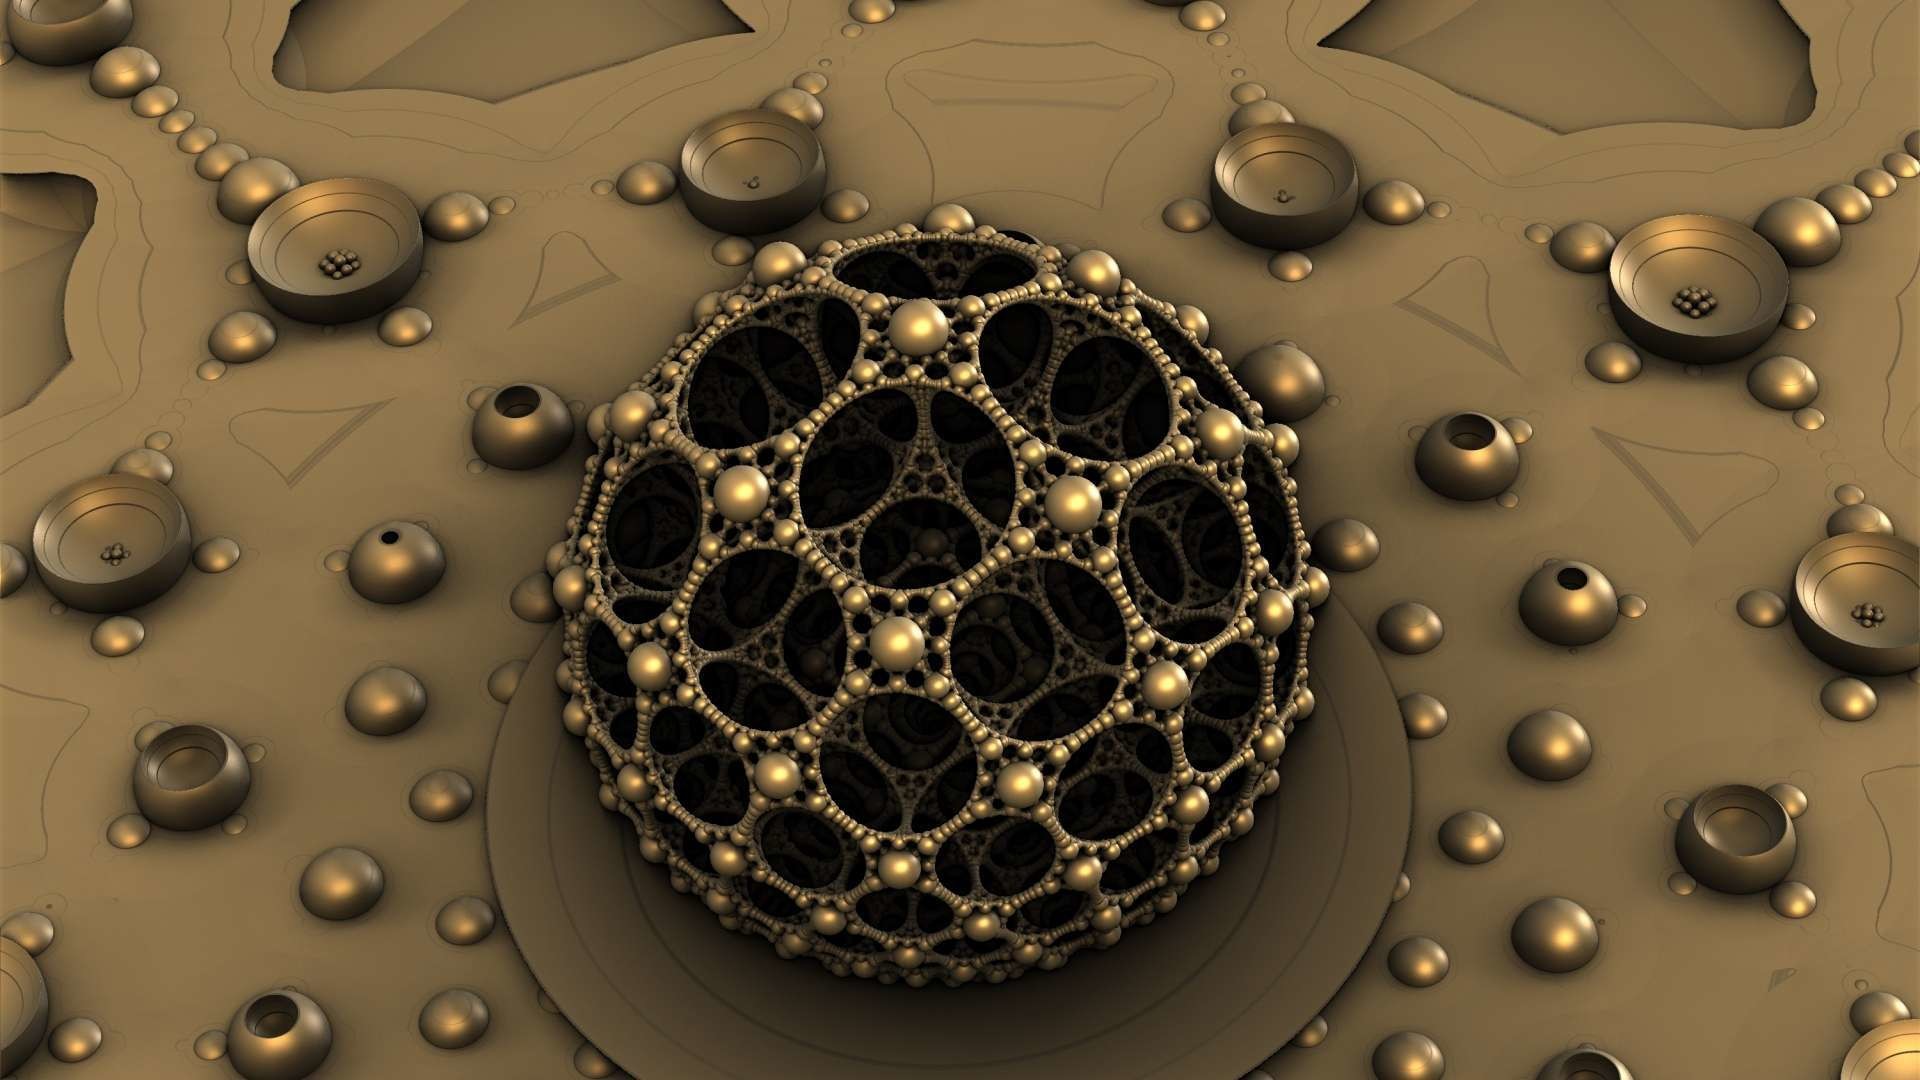 1920x1080 balls-fractal-shape-hd-wallpaper-1080p.jpg (1920Ã